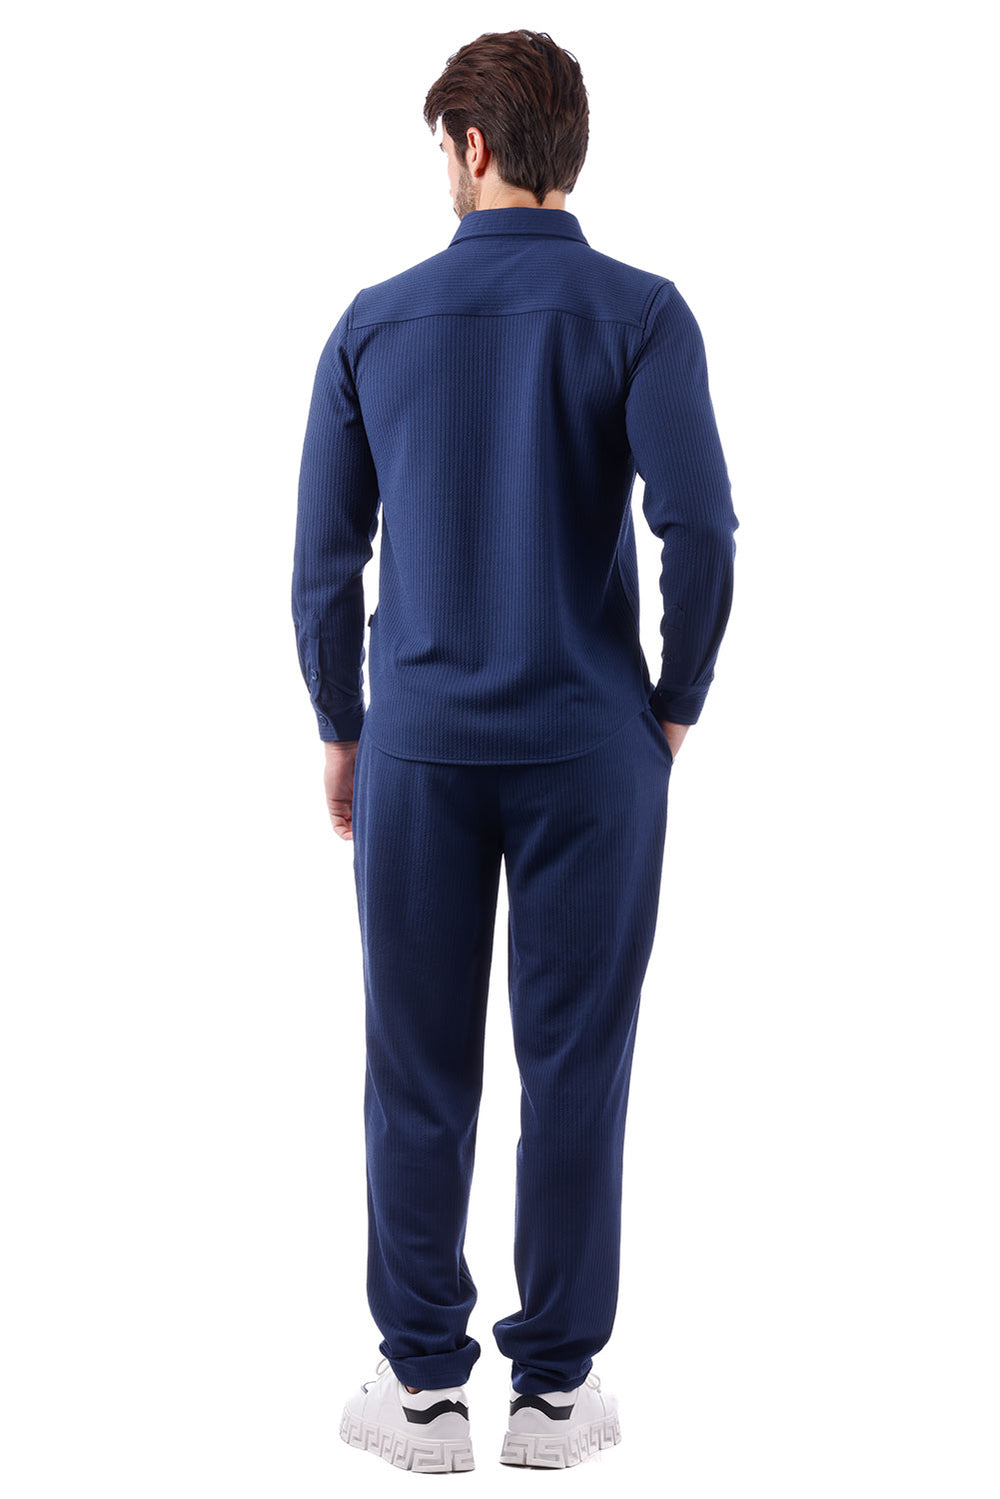 BARABAS Men's Solid Color Loungewear Stretch Leisure Suits 4JJ24 Navy